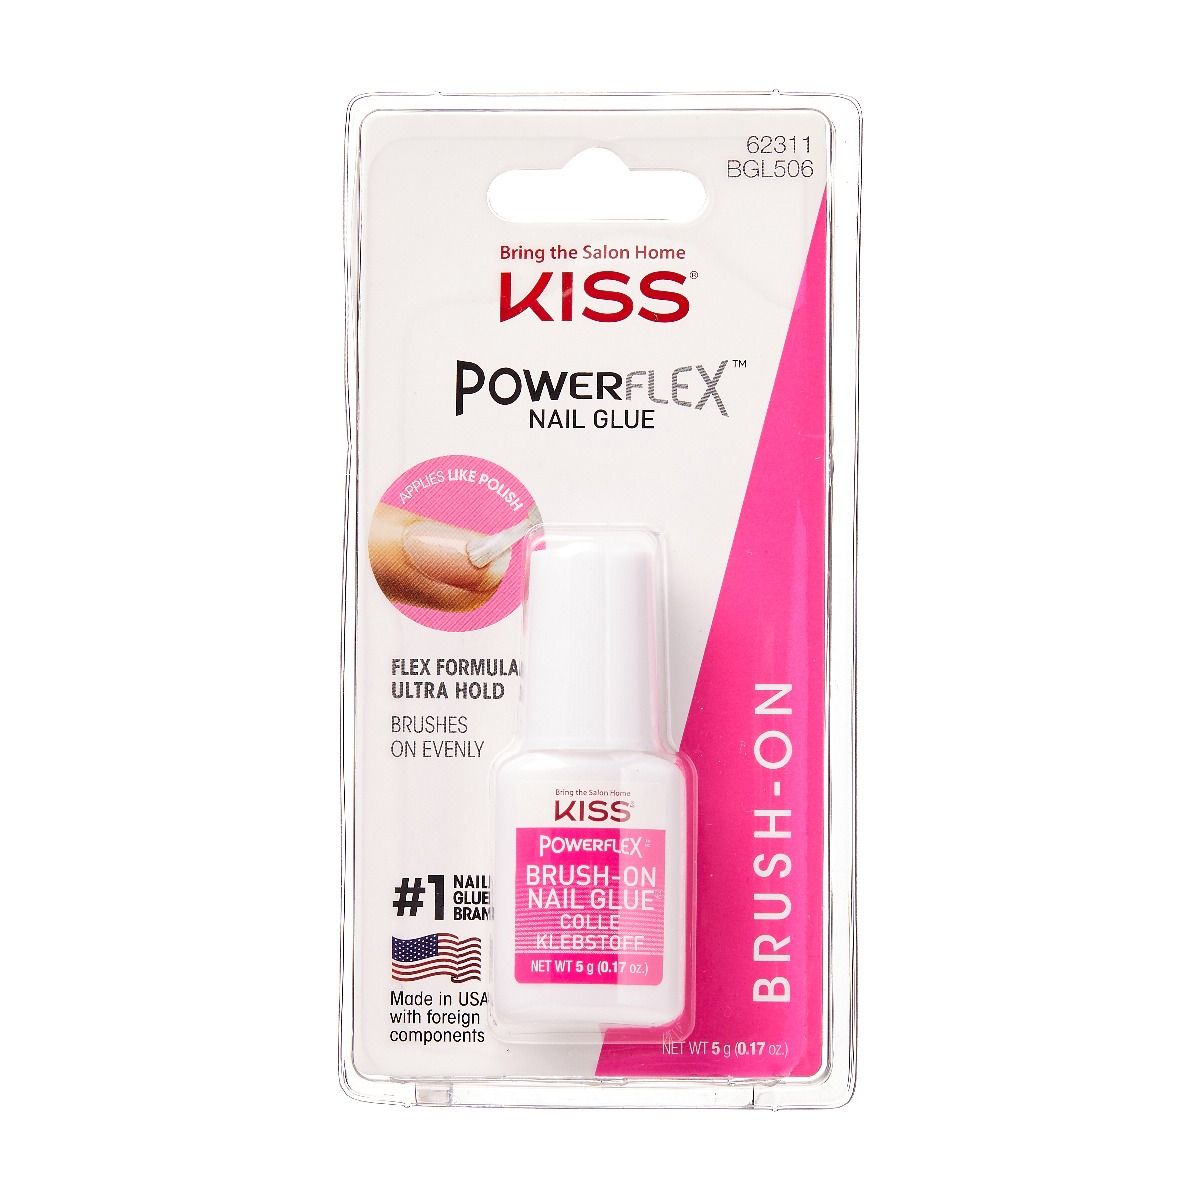 KISS POWER GLUE BRUSH-ON NAIL GLUE BGL506